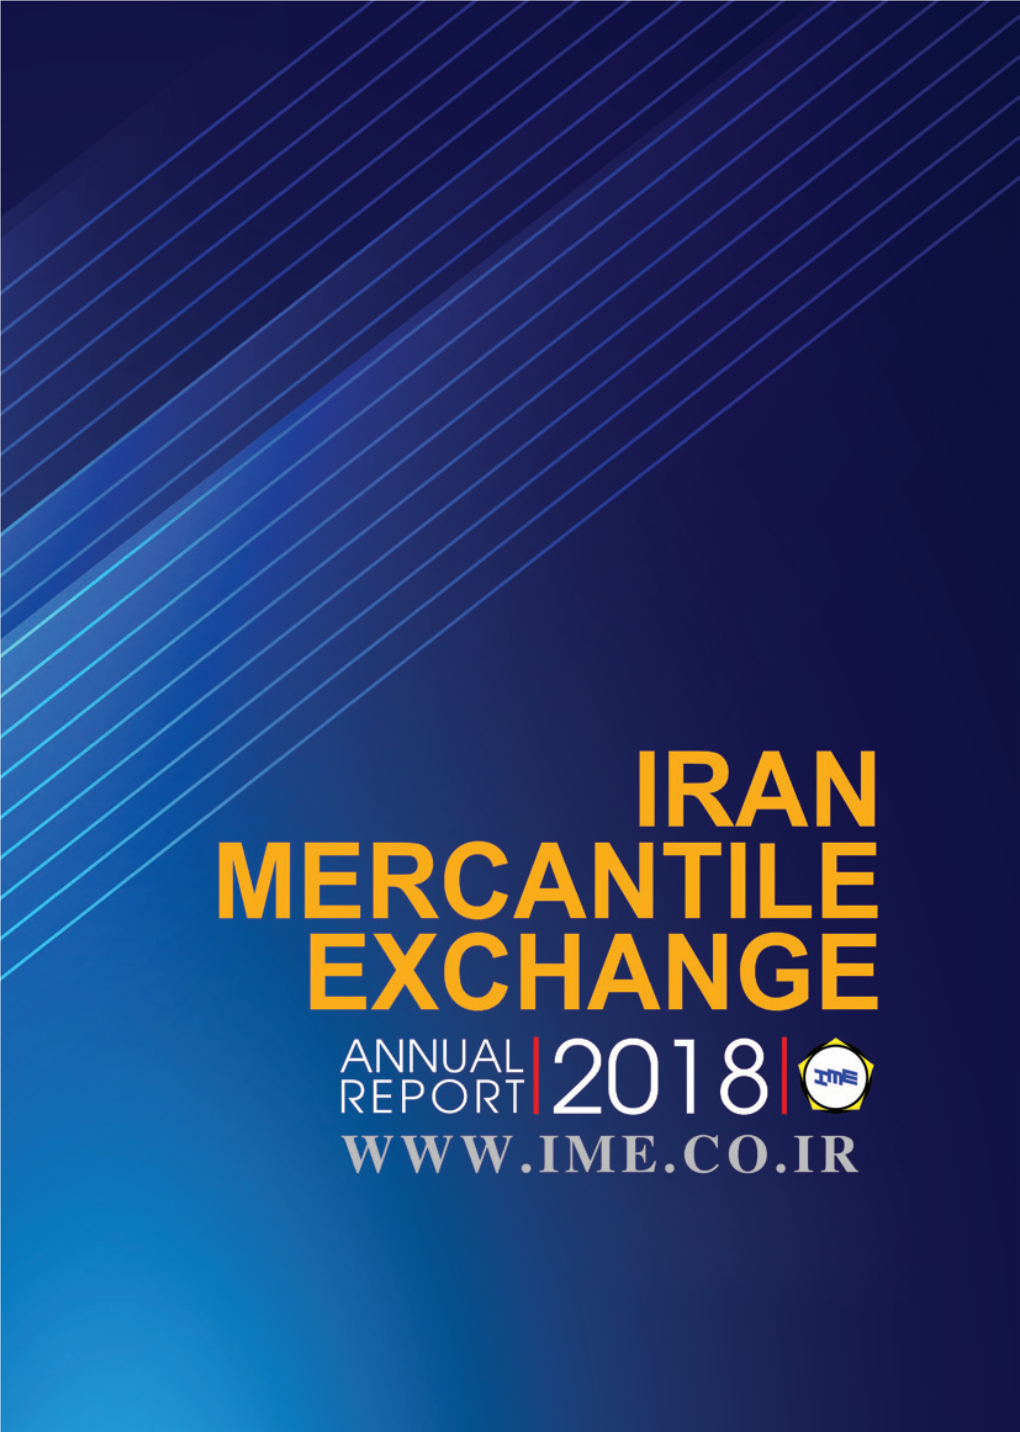 IME- Annual Report 2018